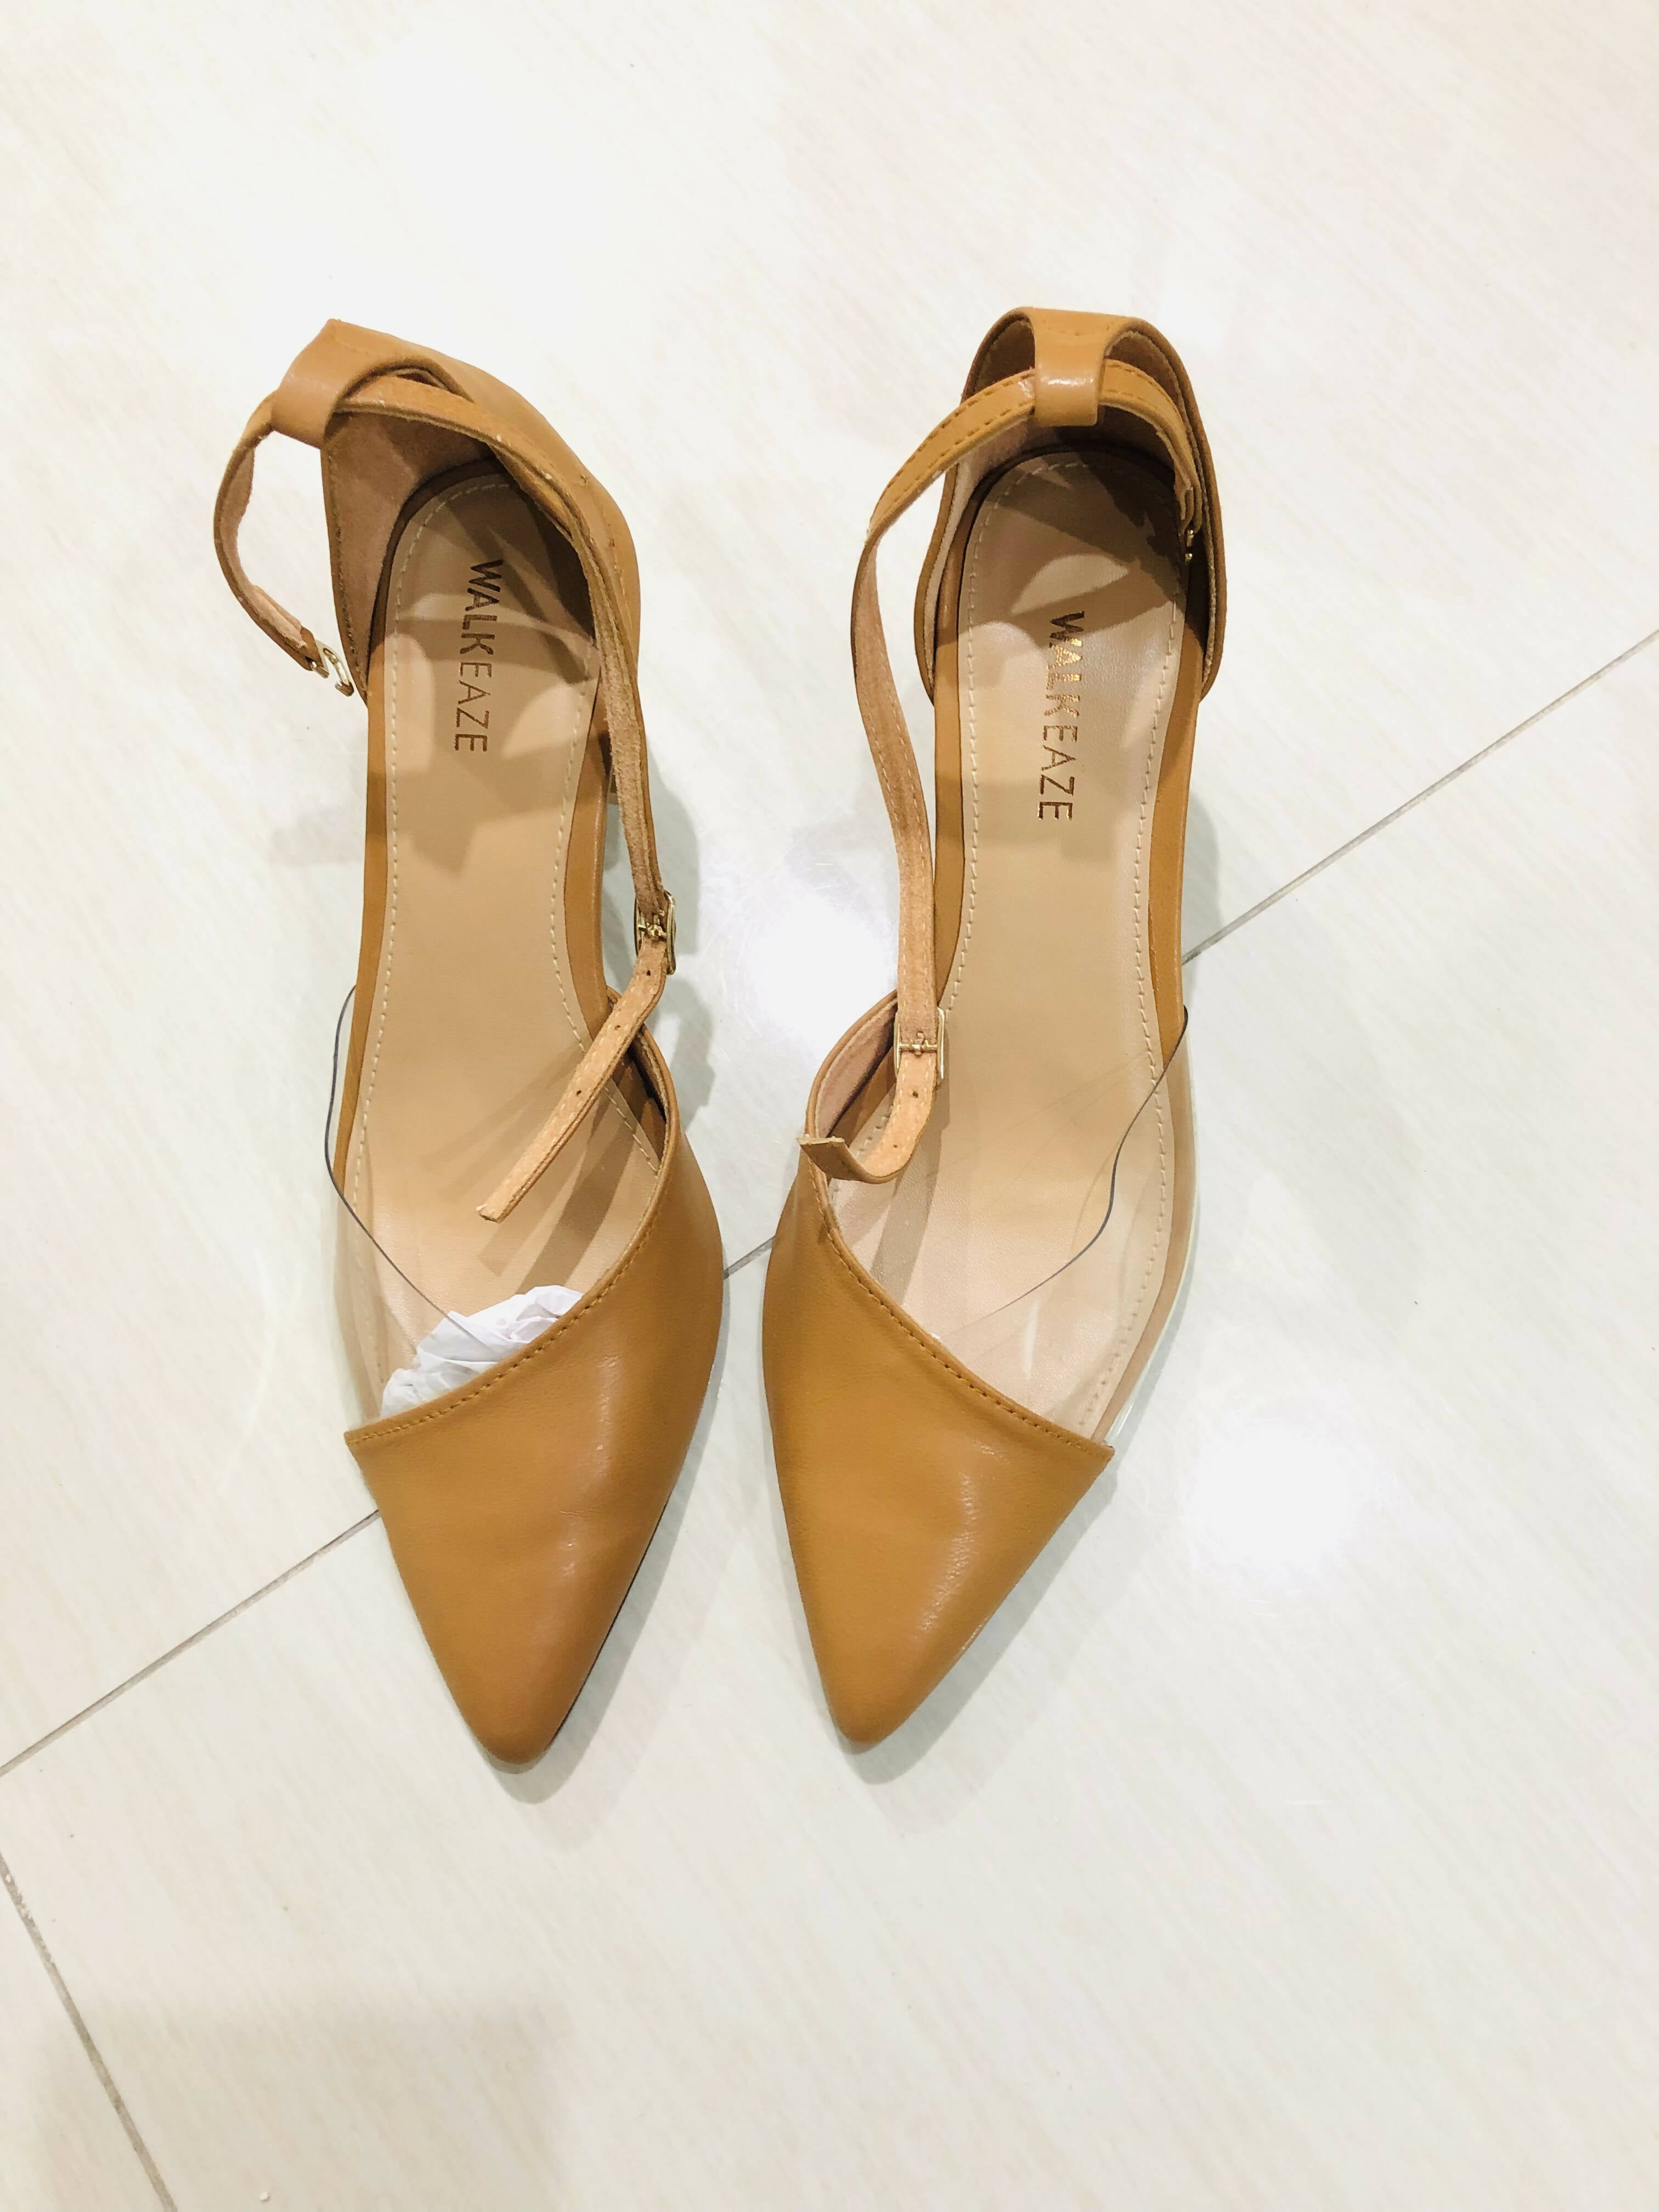 Heels| Light Brown fancy Heels (Size: 39) | Women Shoes | New